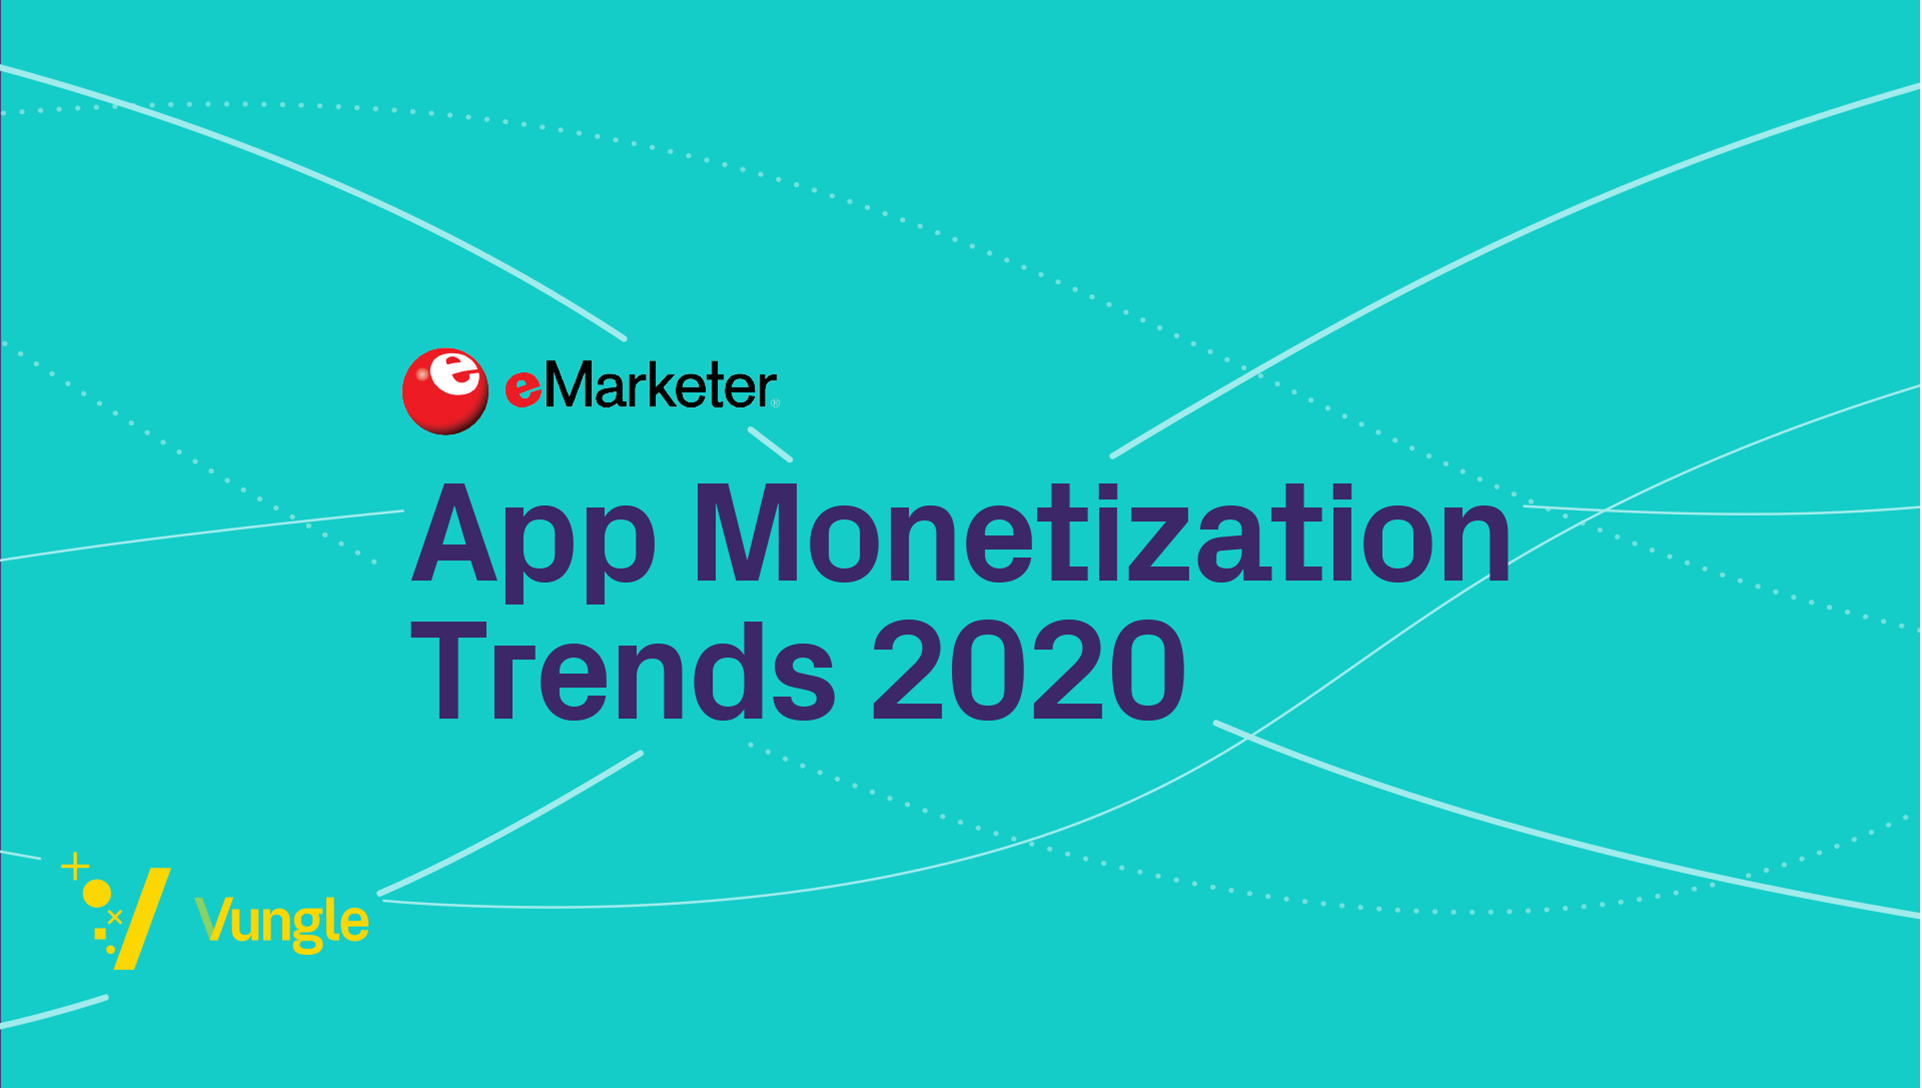 Vungle Featured in App Monetization Industry Report